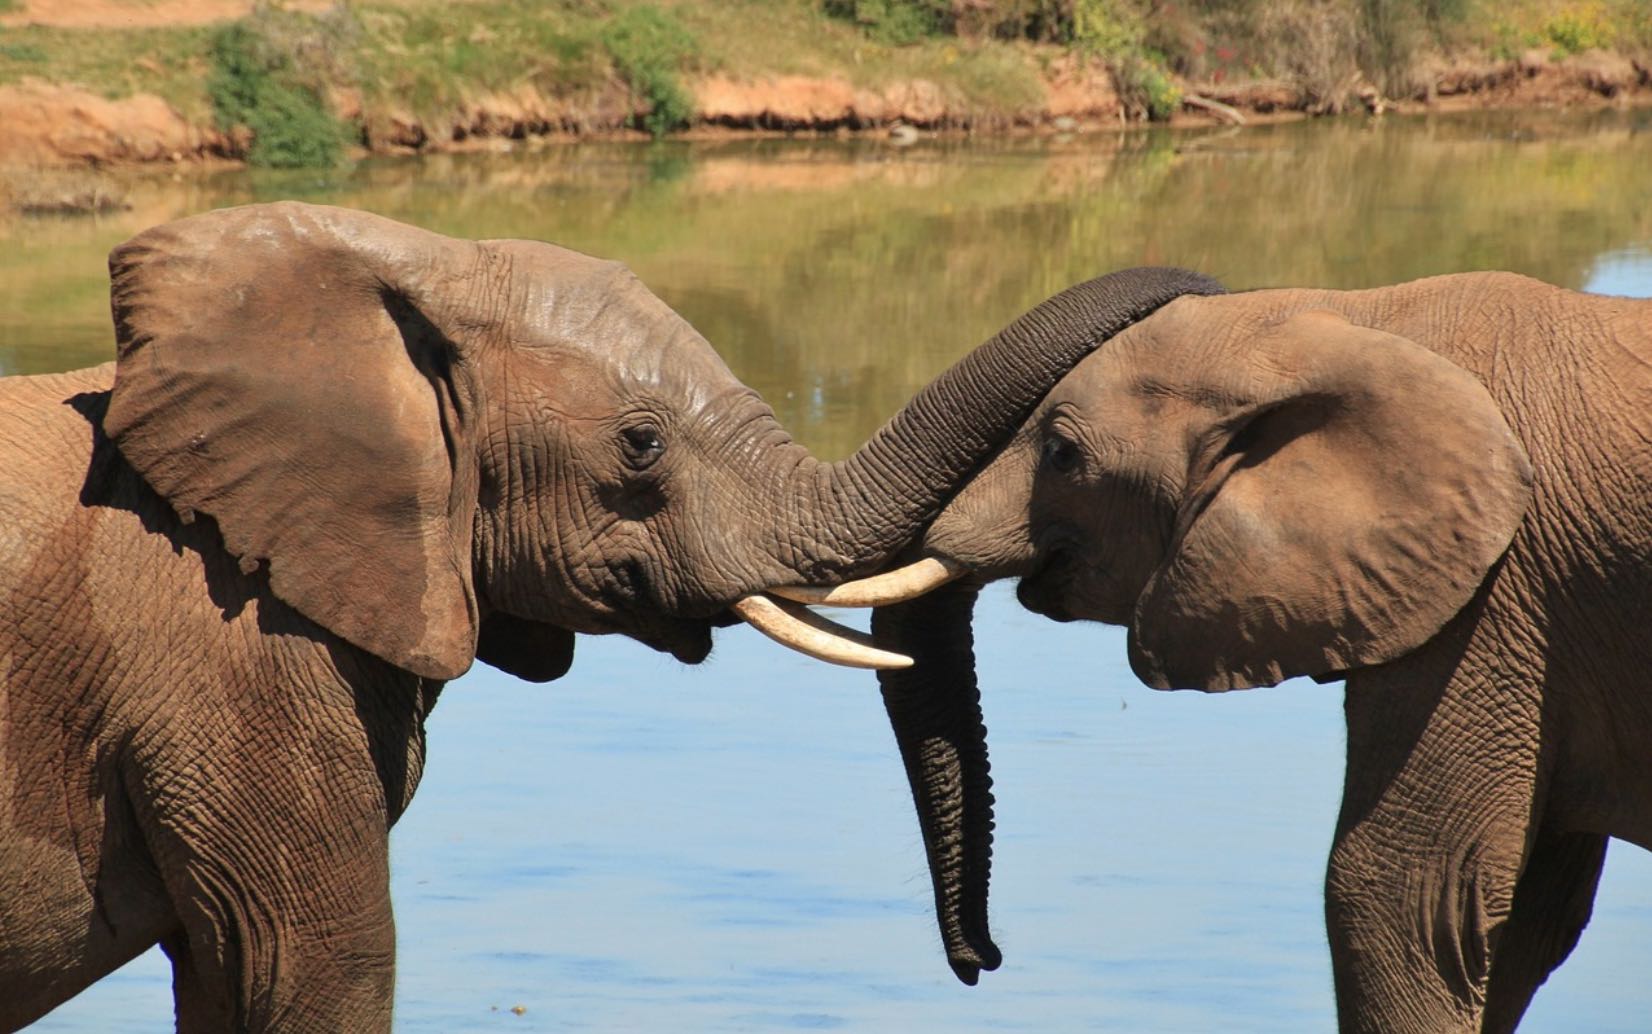 2-Elephants-lo-rez-free-photo-from-African-website